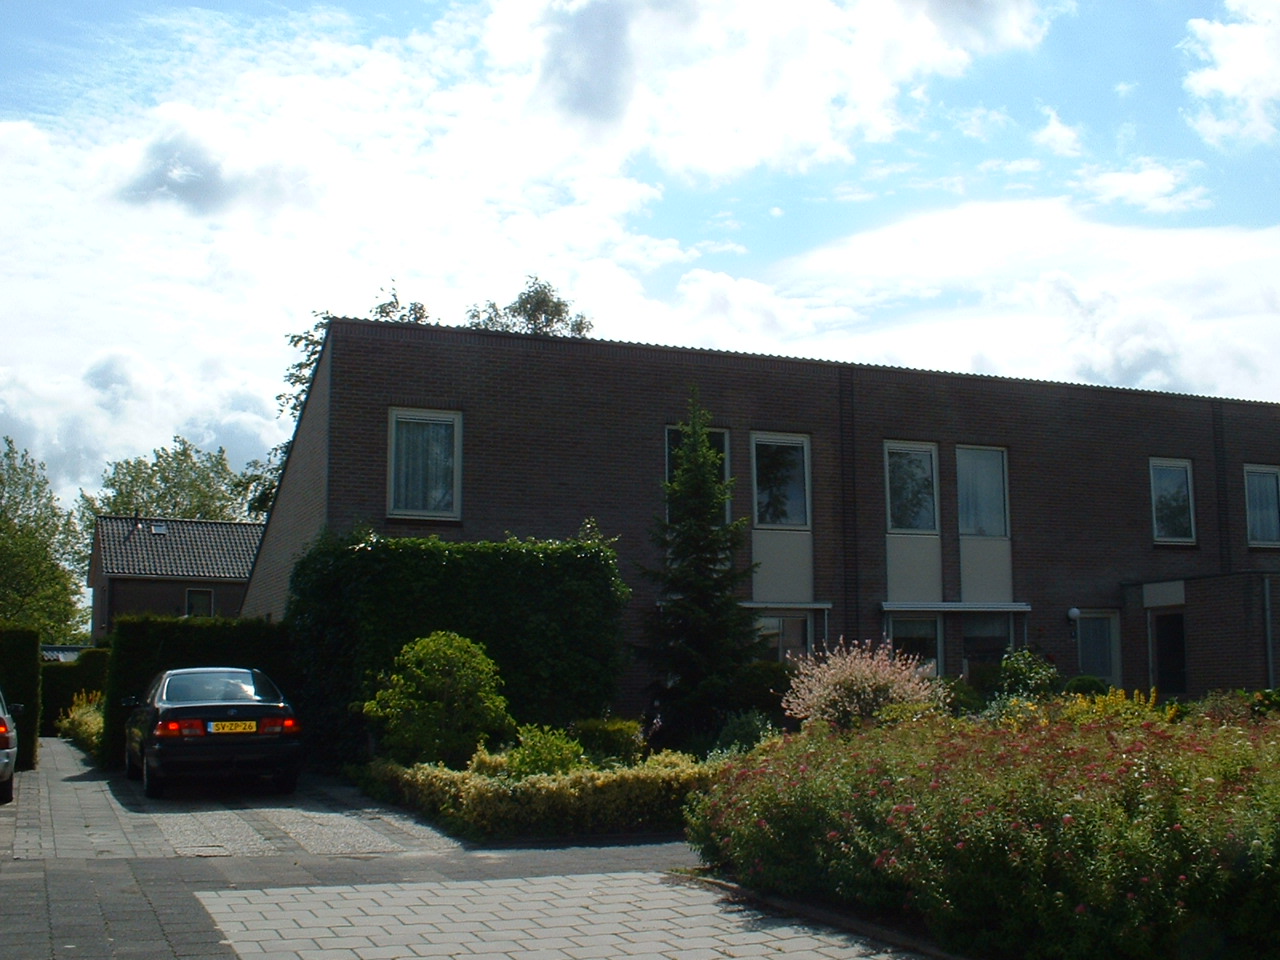 Kalkovenstraat 8, 7902 ND Hoogeveen, Nederland